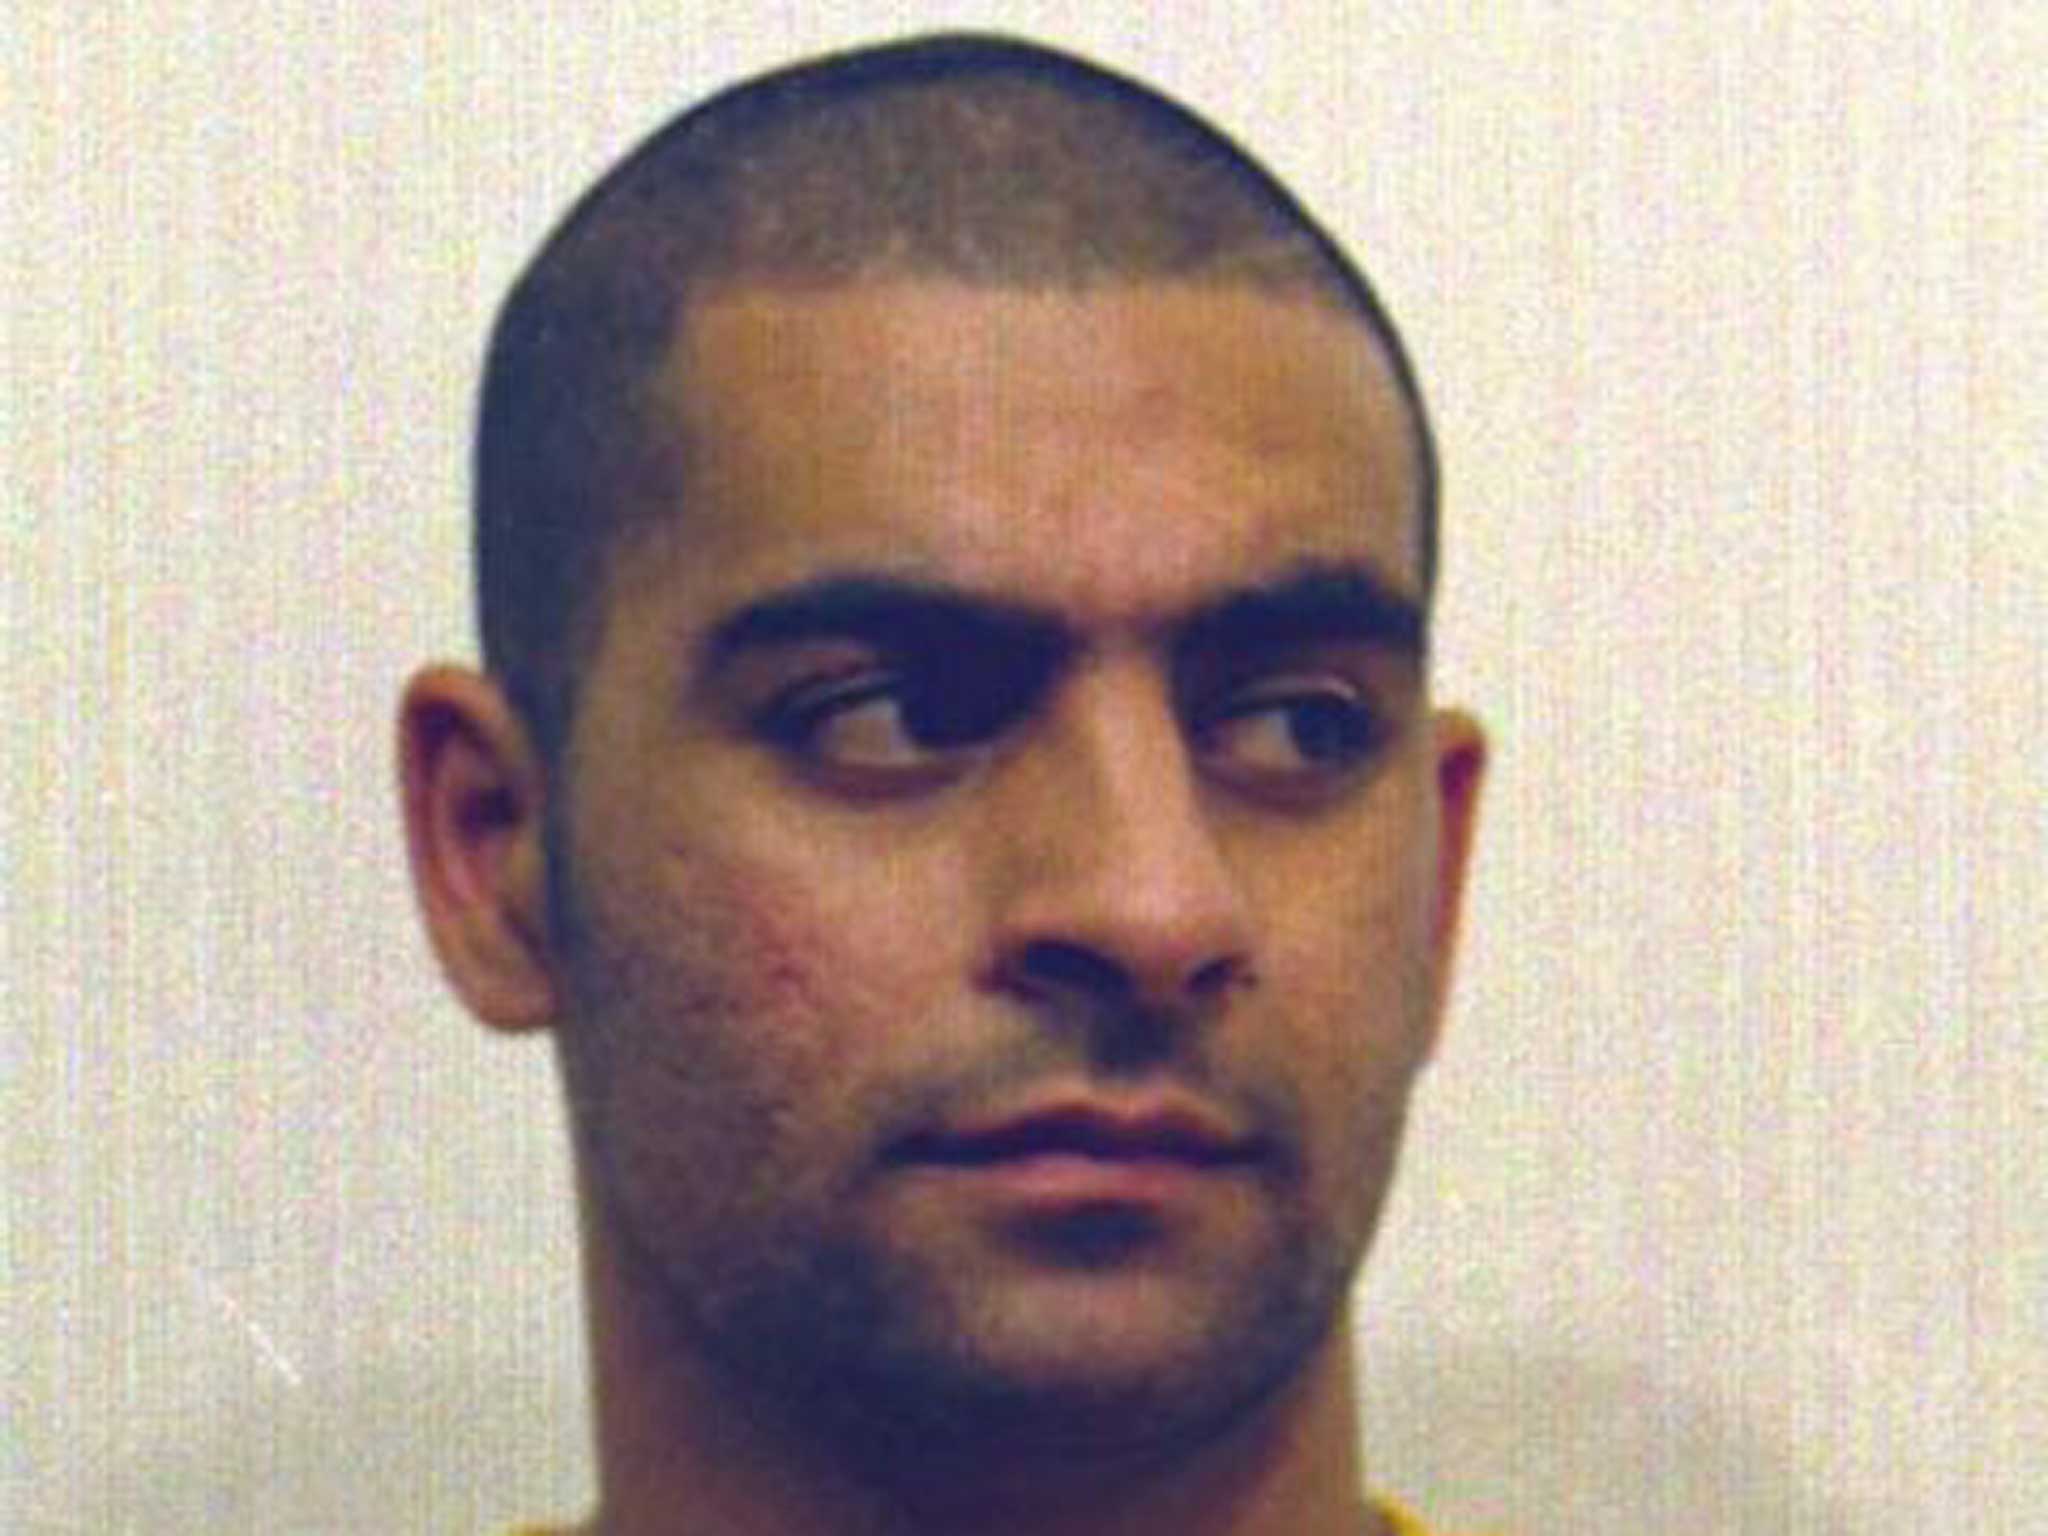 Shakiel Shazad was sentenced to 18 years in prison in 2003